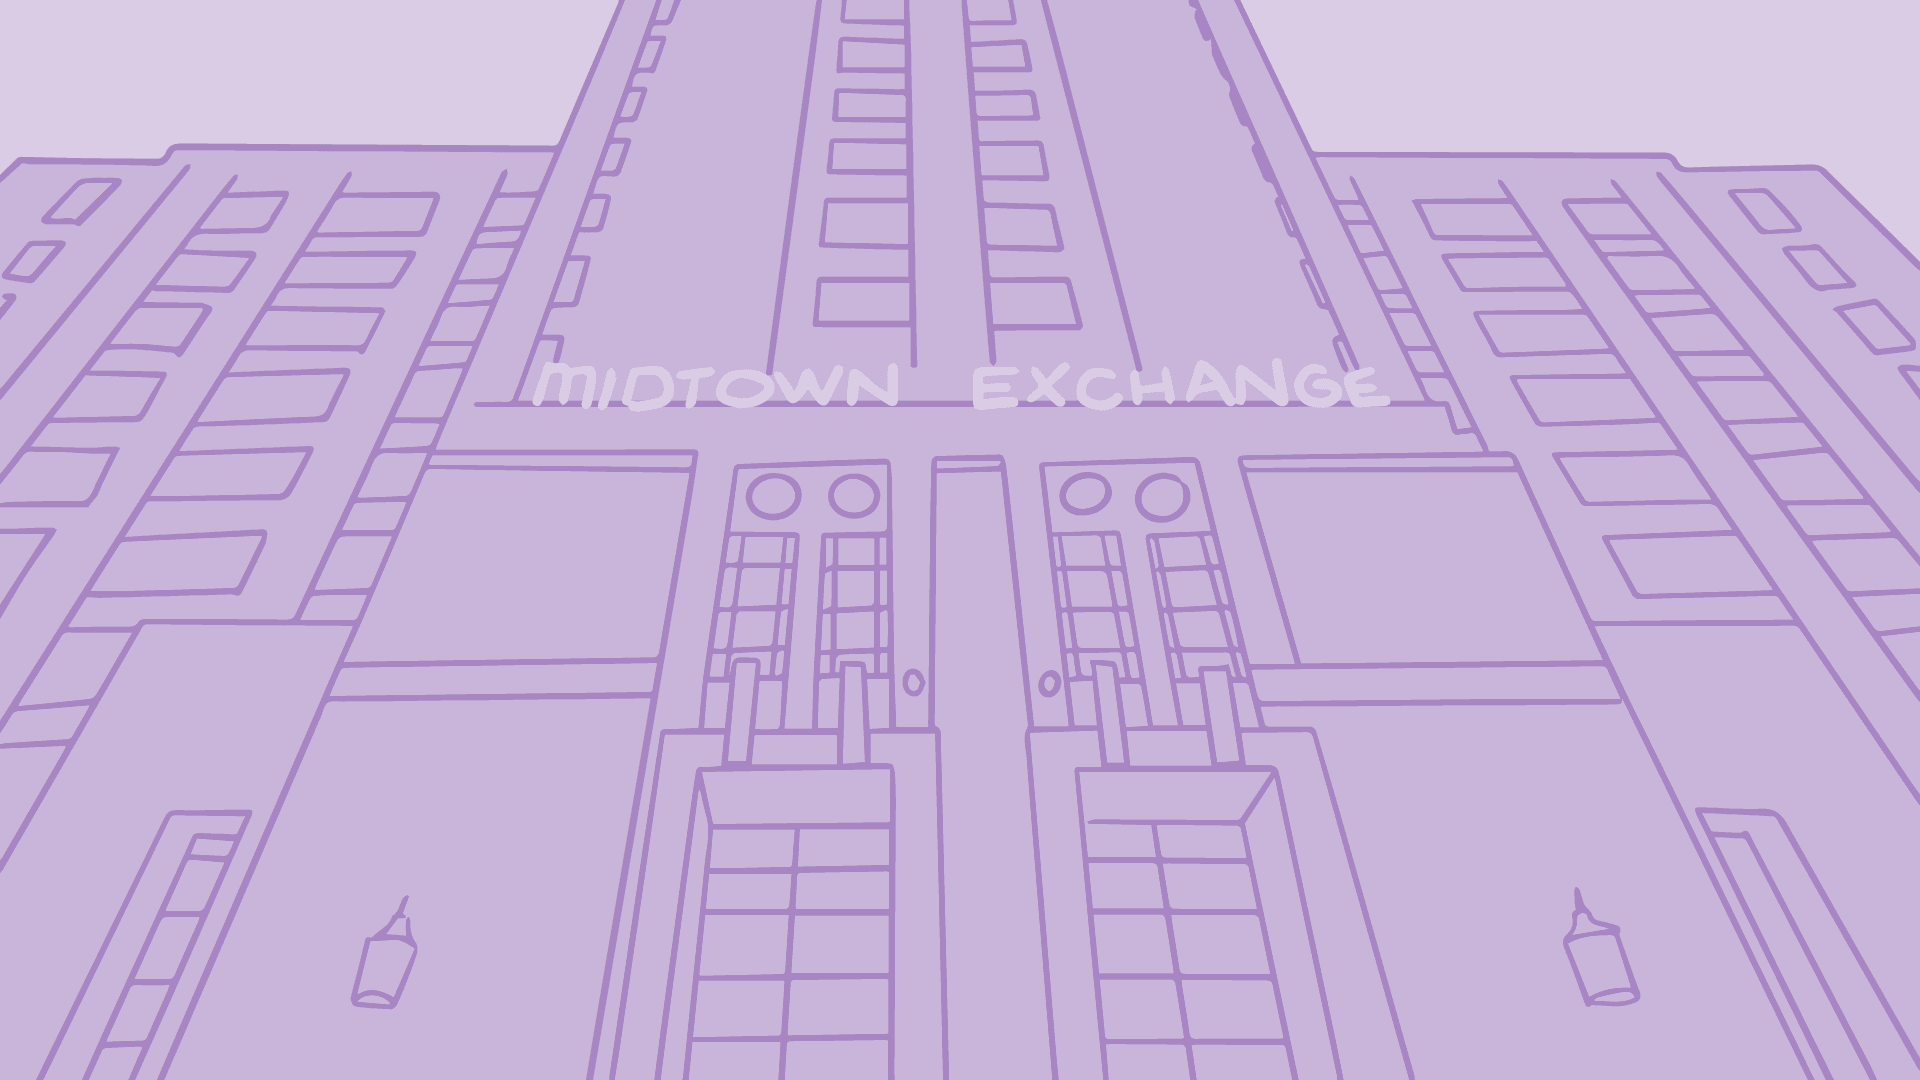 Illustration of midtown exchange in monochromatic purple